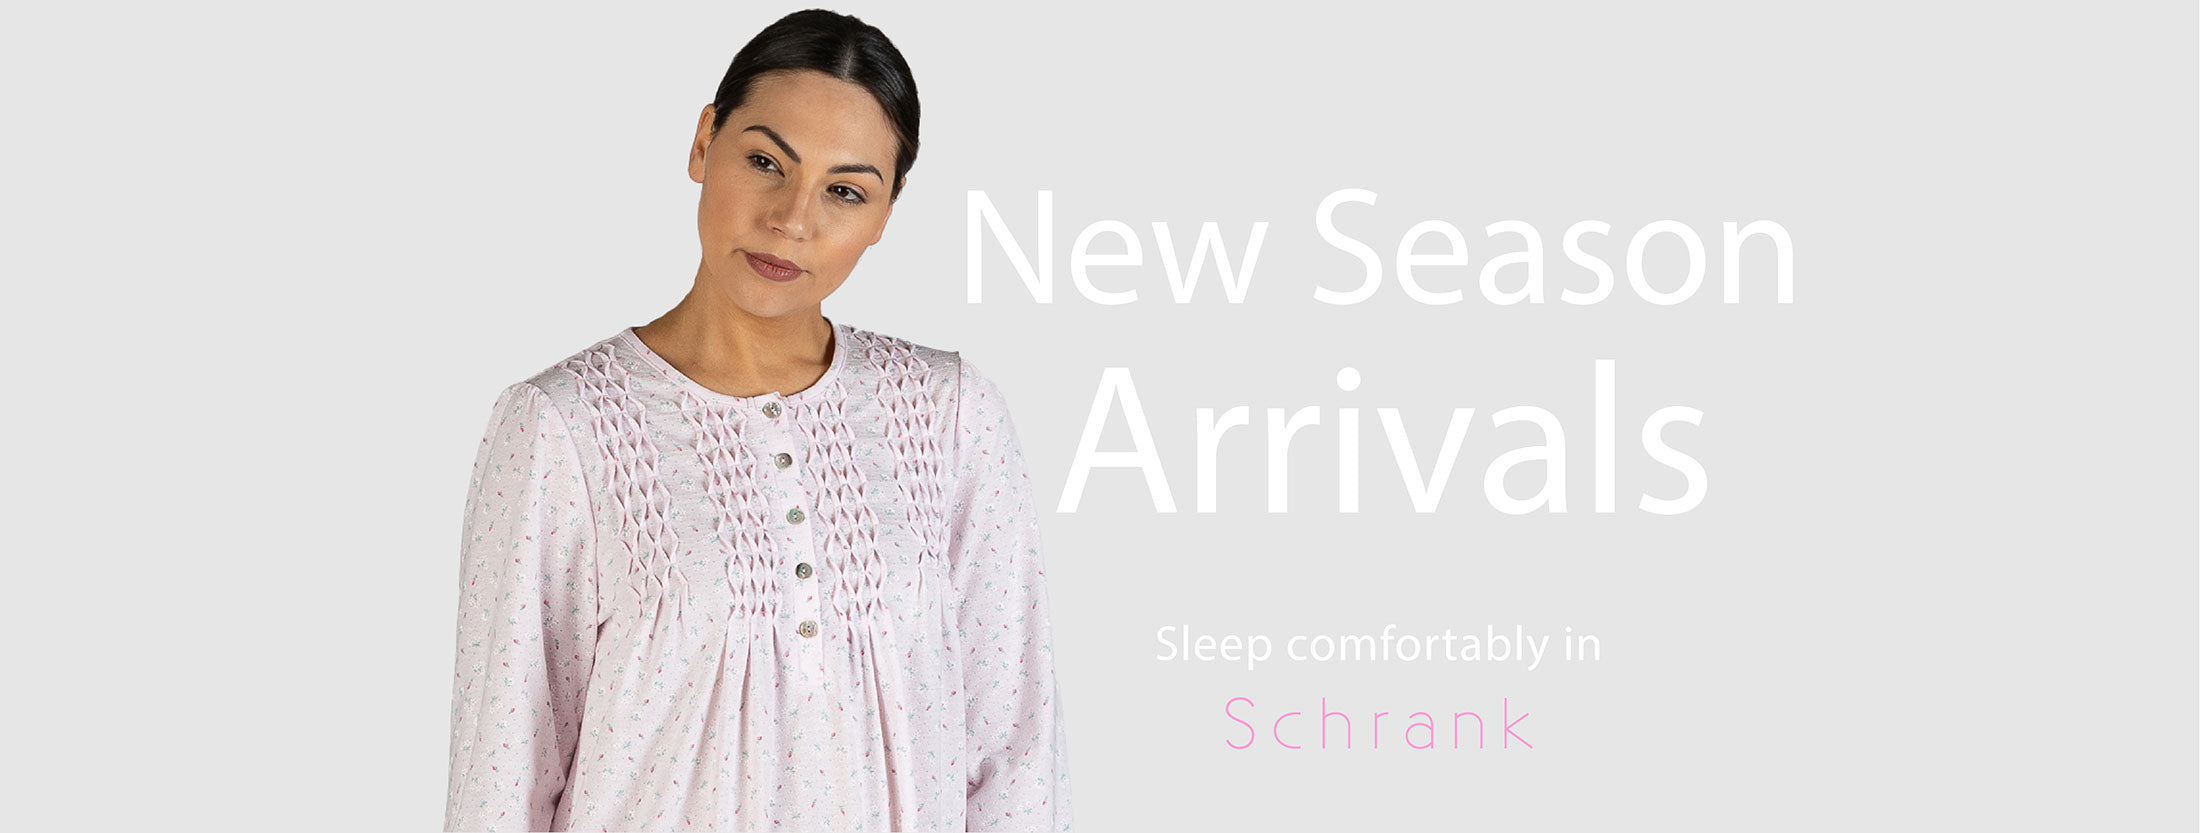 New Season Arrivals - Sleep Comfortably in Schrank